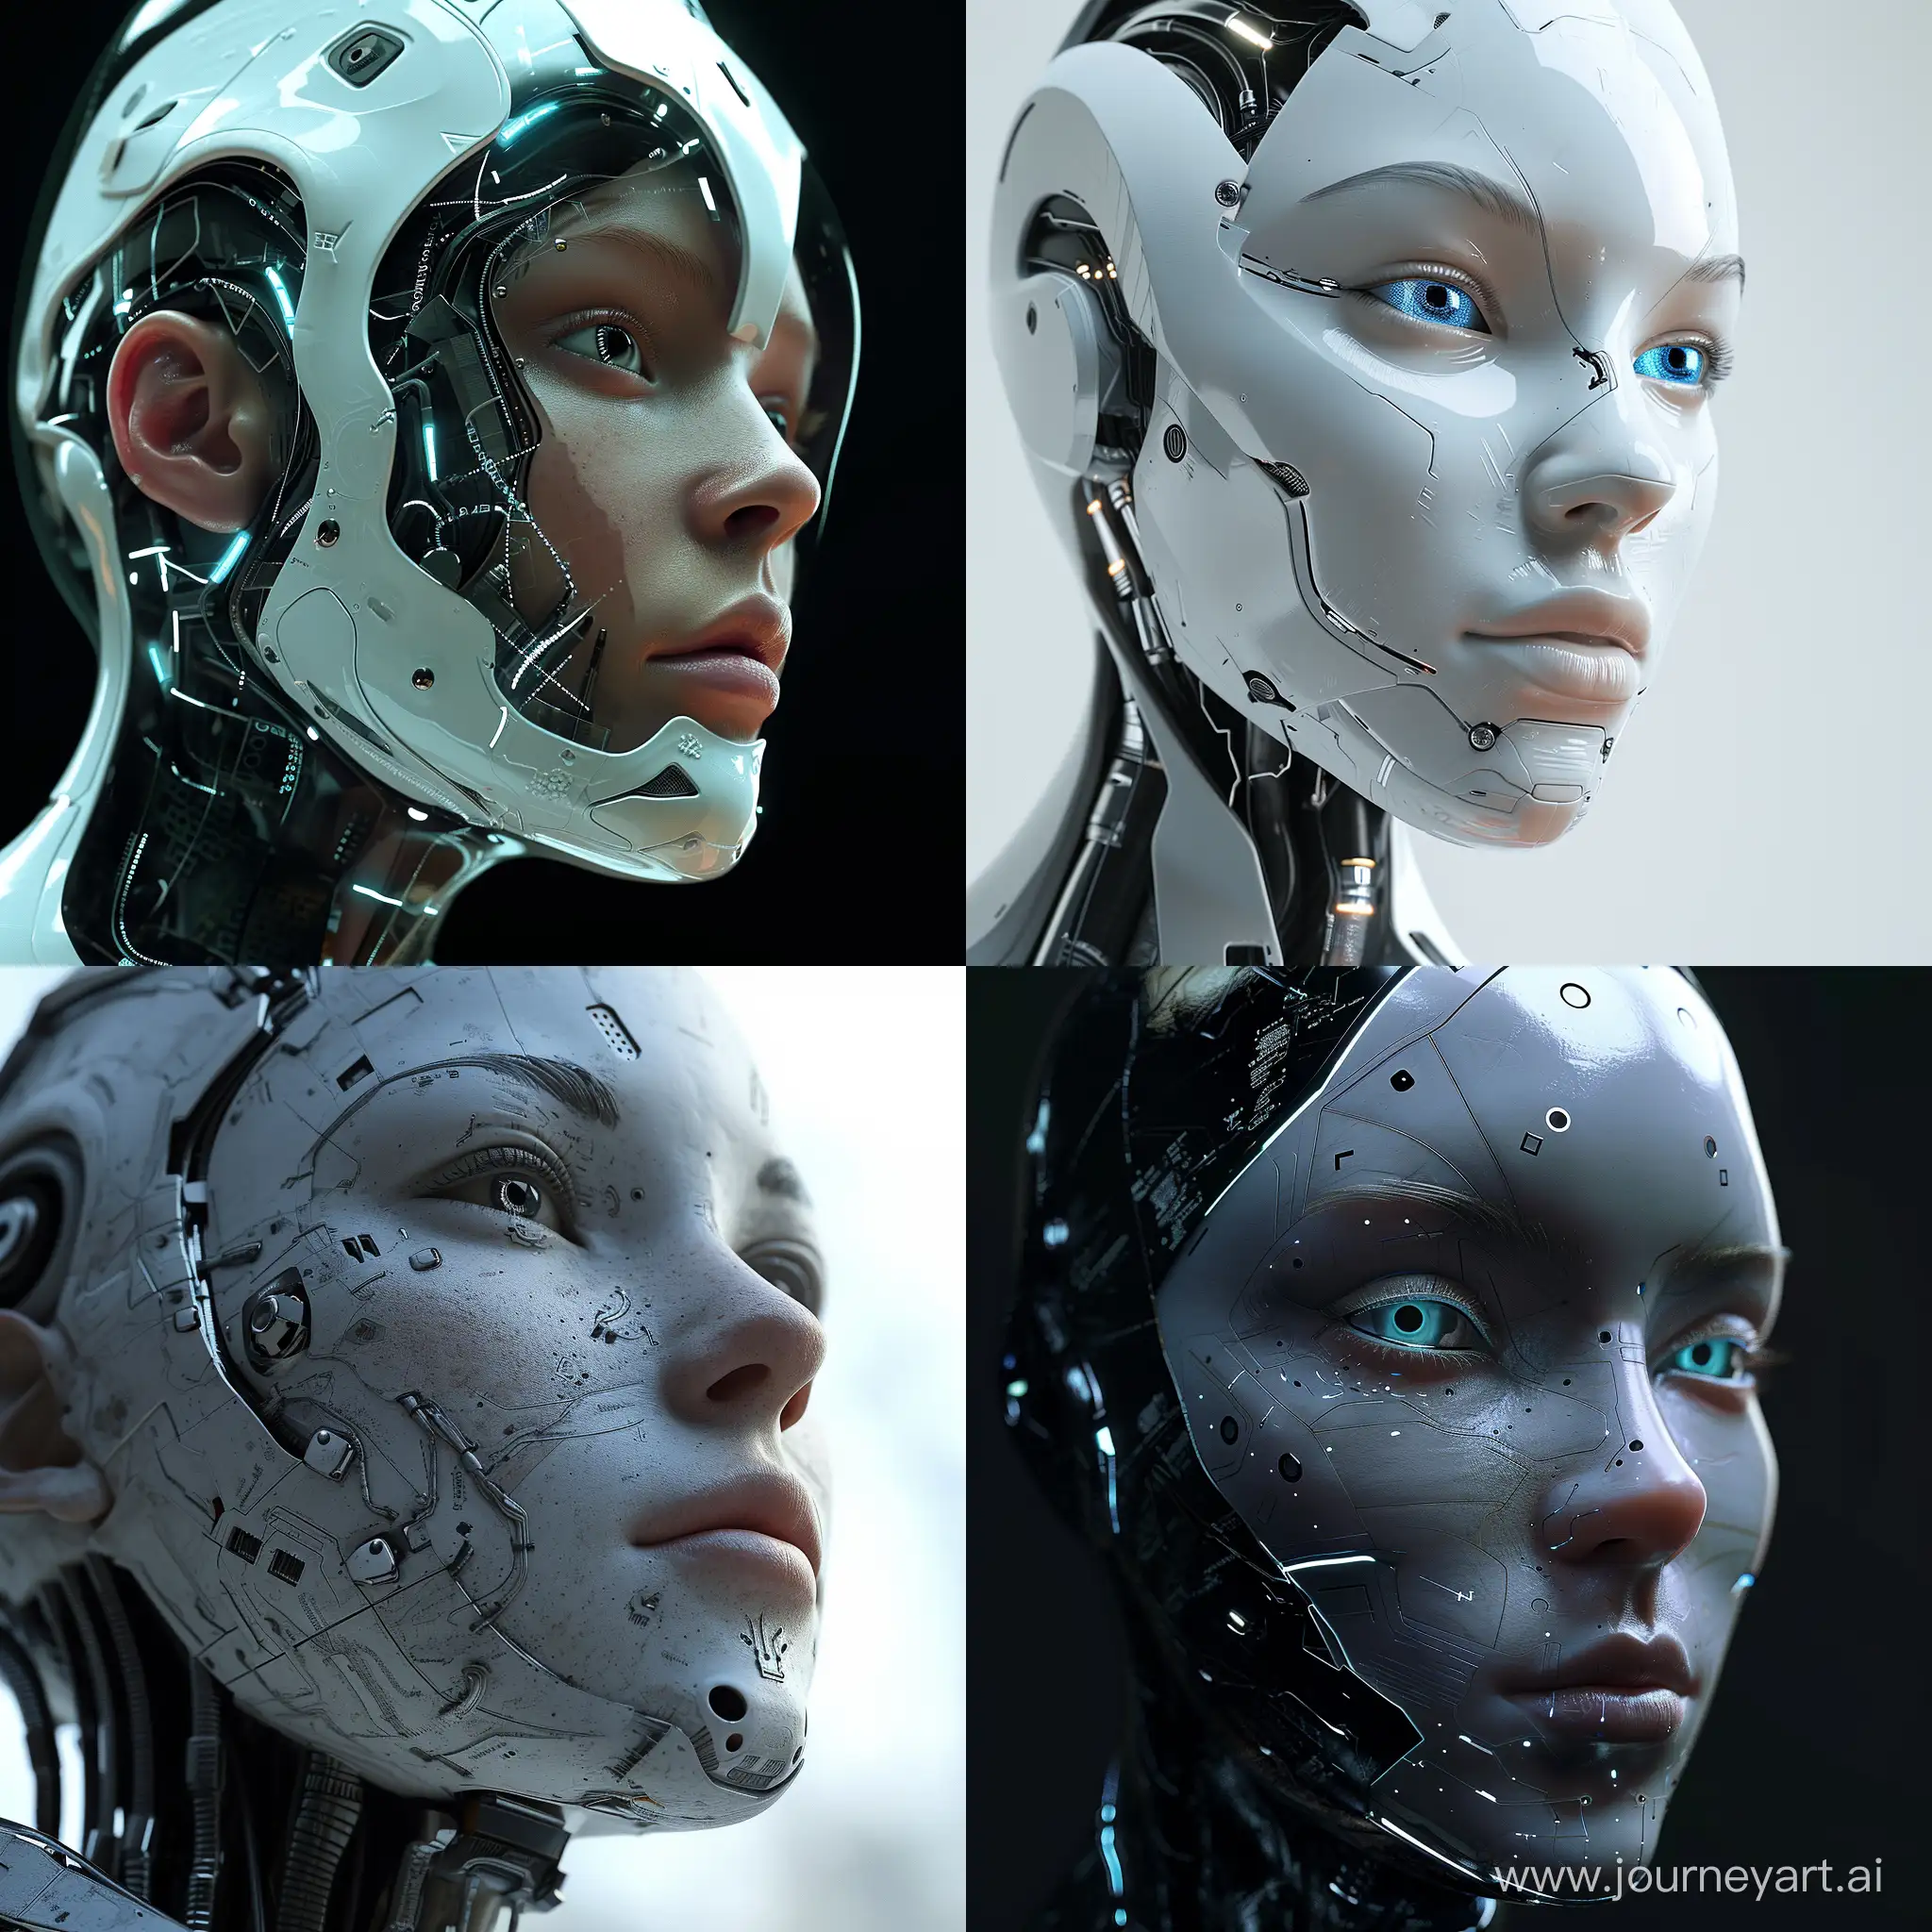 Futuristic-Human-Faces-in-a-Vibrant-Virtual-World